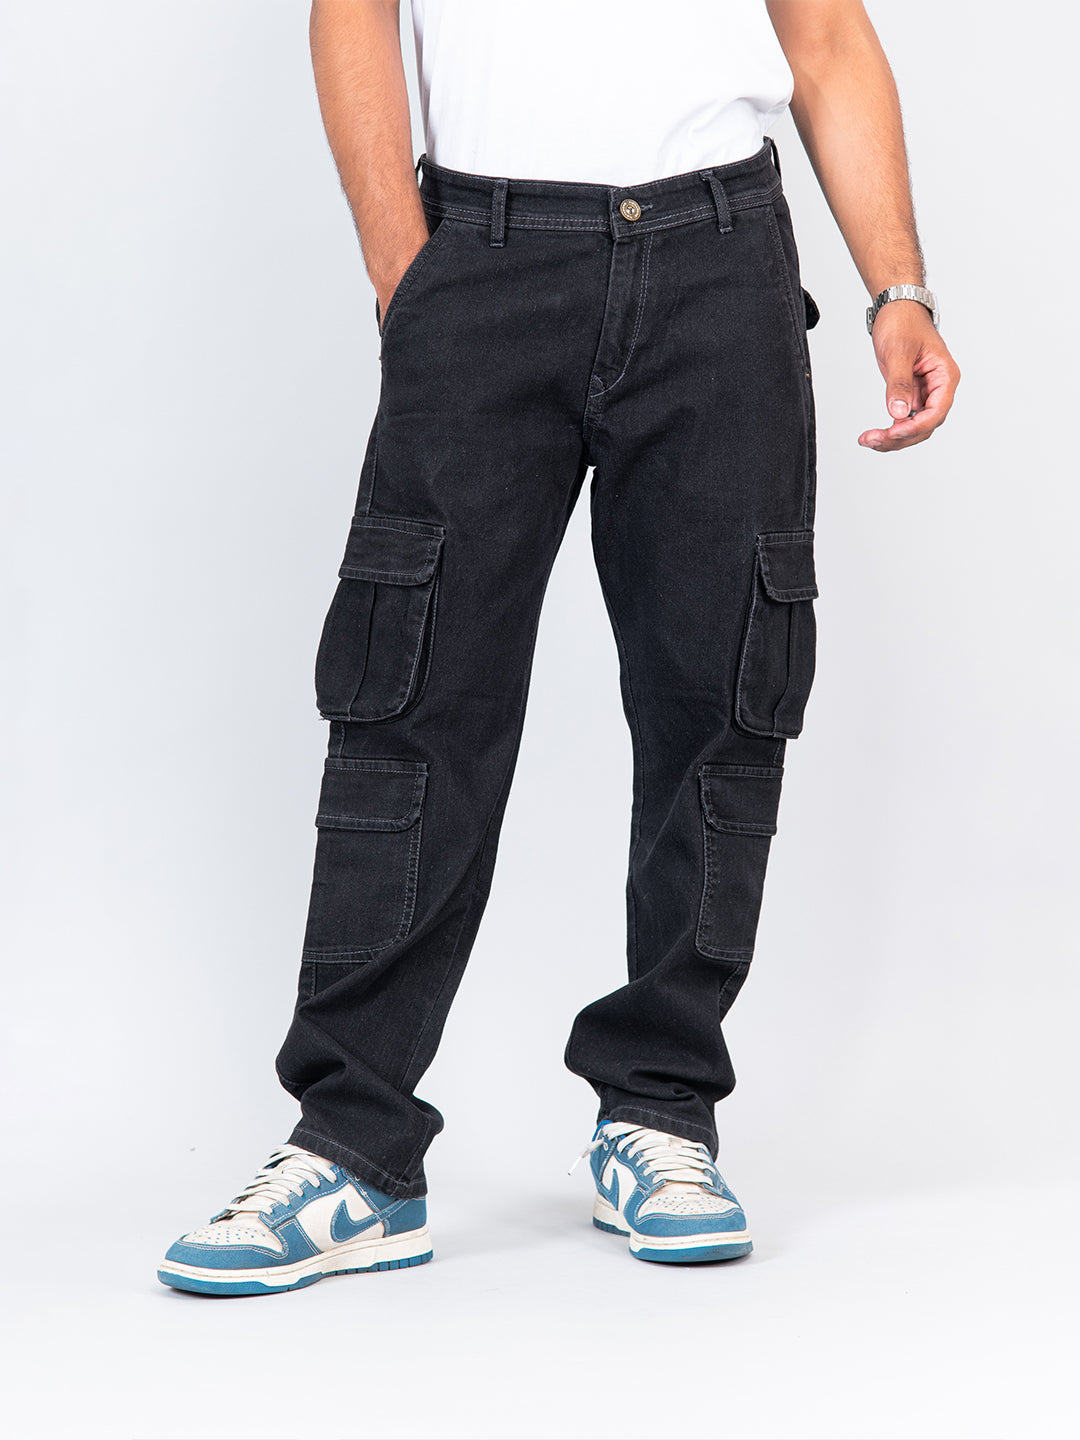 Buy Carbon Black Cargo Jeans Online